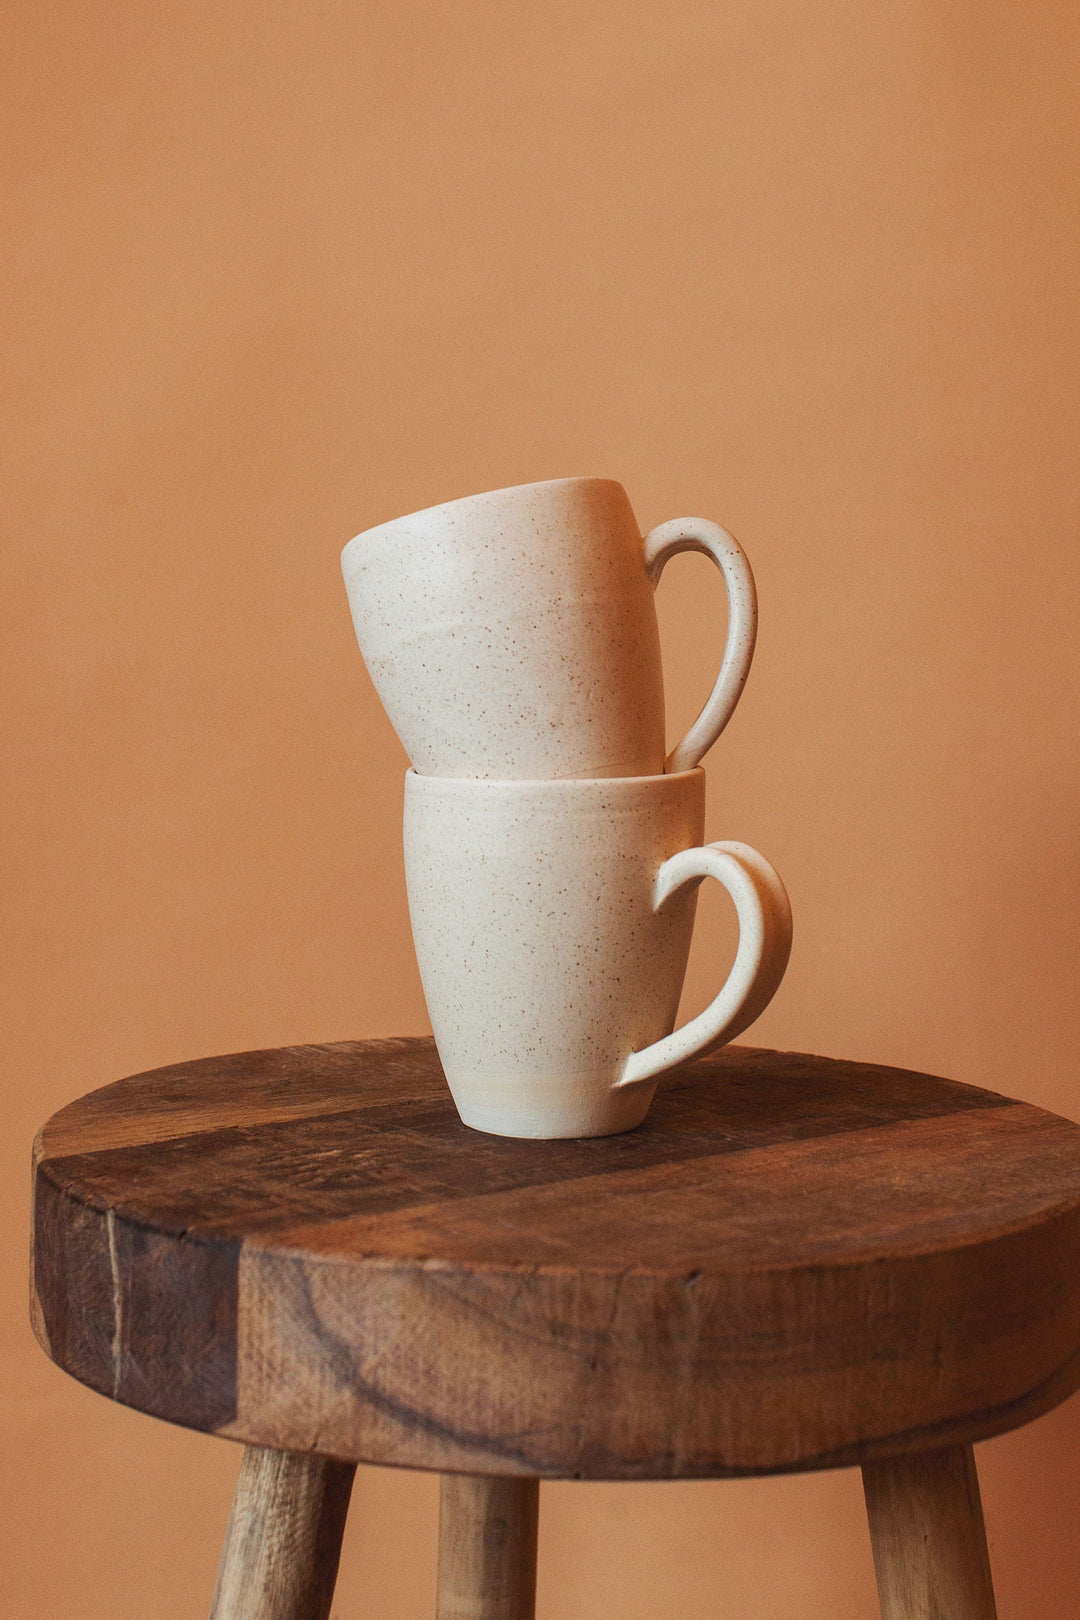 Idlewild Floral Co. Handmade Ceramic Mug